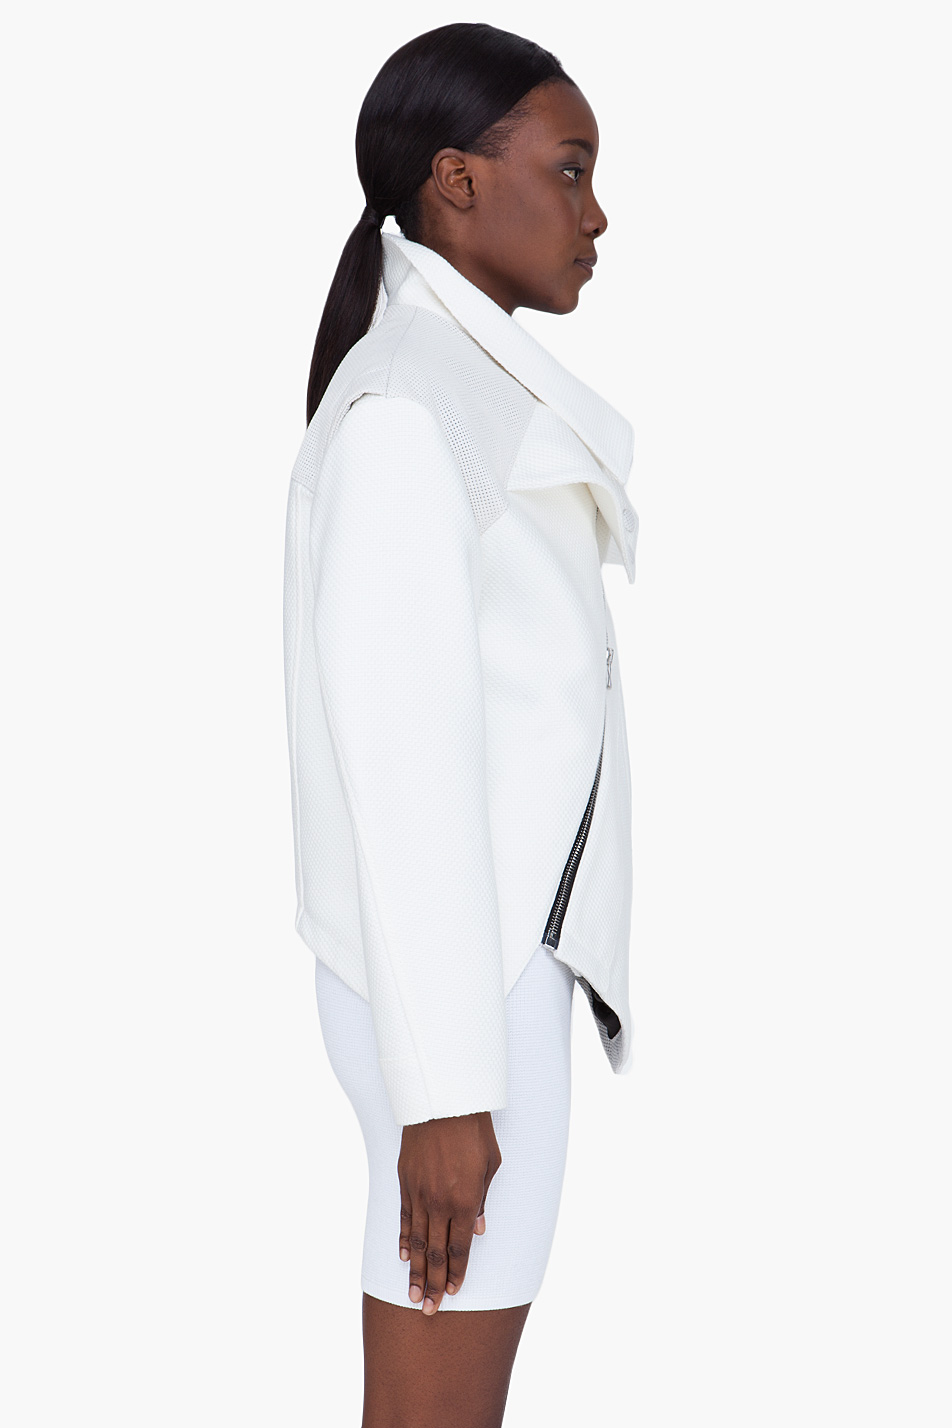 Lyst - Proenza Schouler White Leather Trim Asymmetric Jacket in White